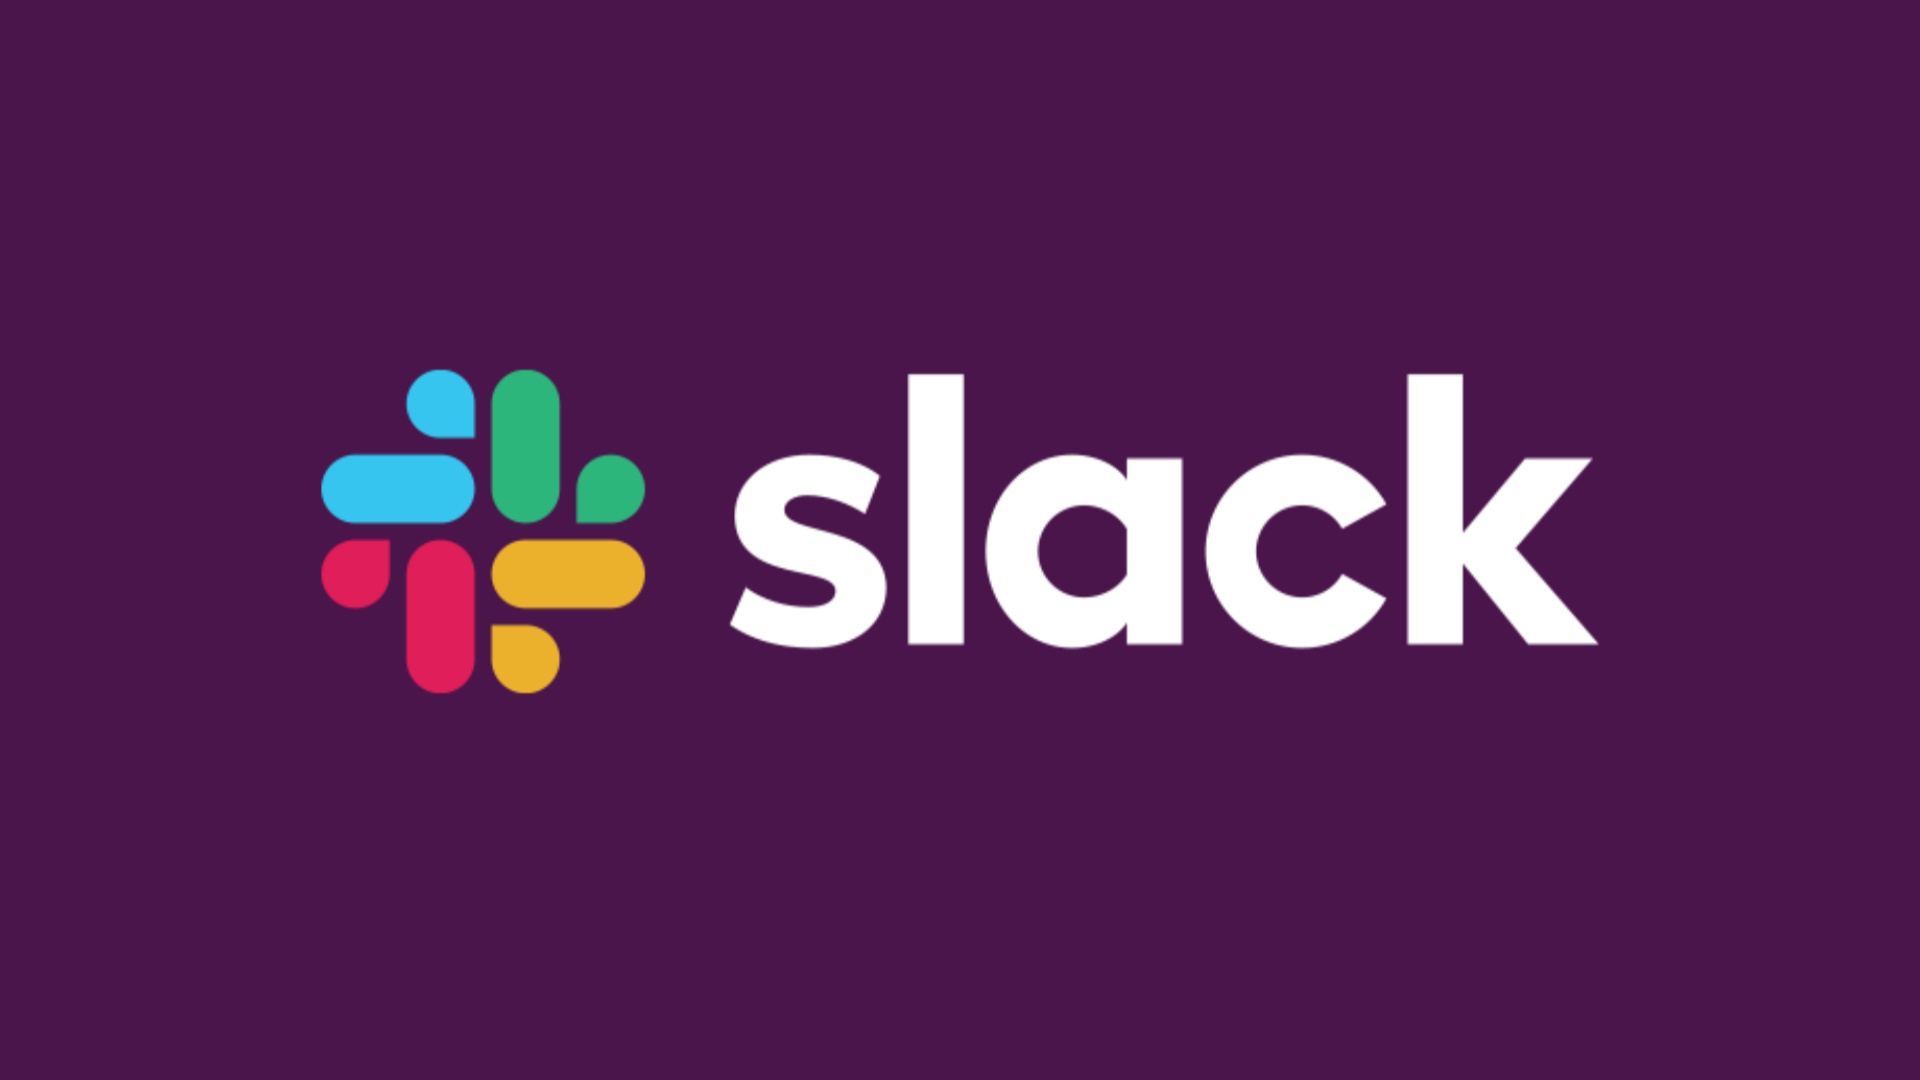 Slack updates desktop experience - it's a 